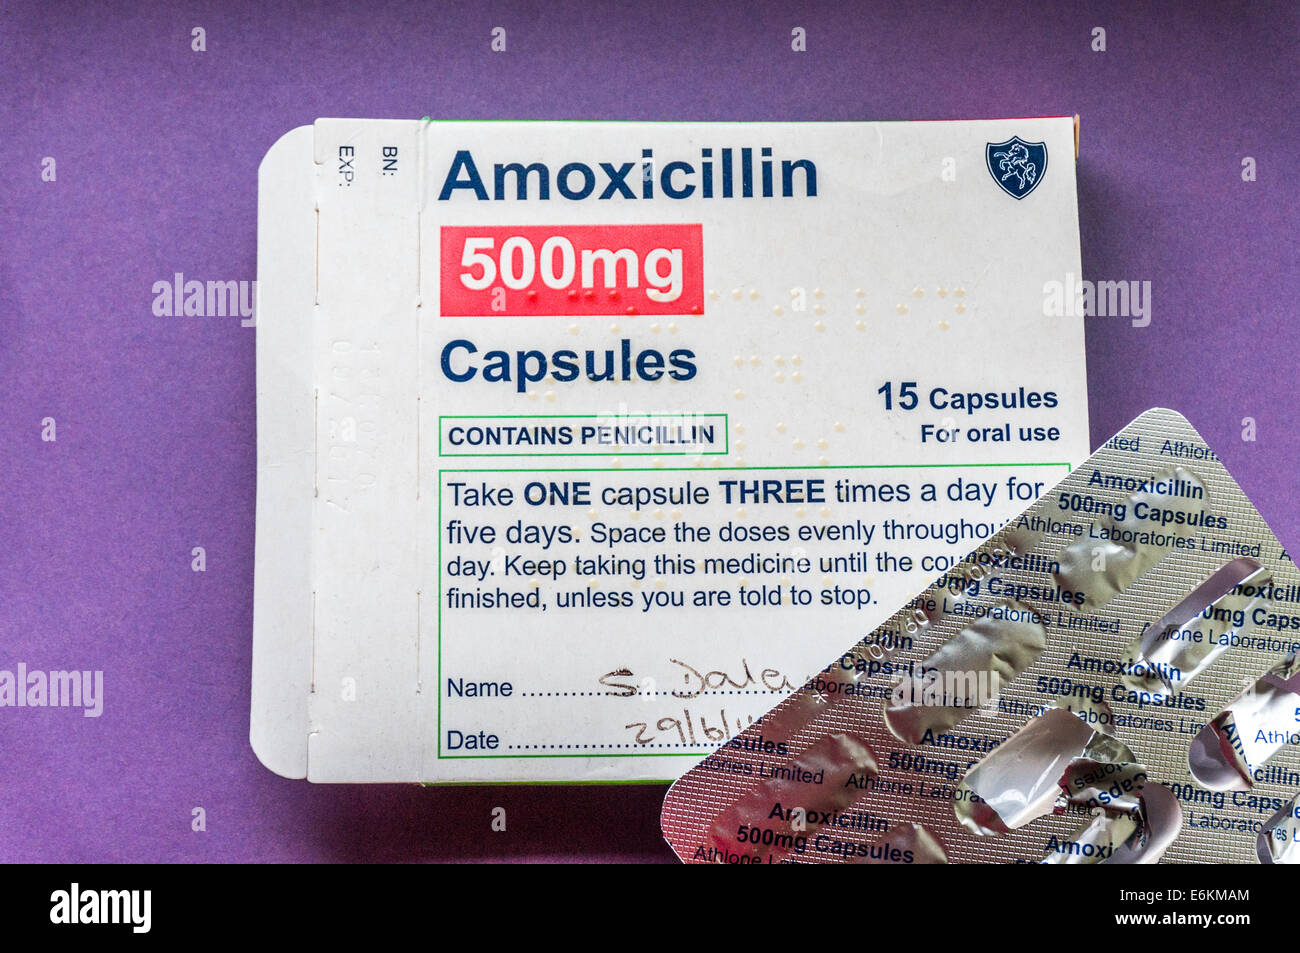 Amoxicillin - antibiotics prescription for oral use - box and capsules. Stock Photo